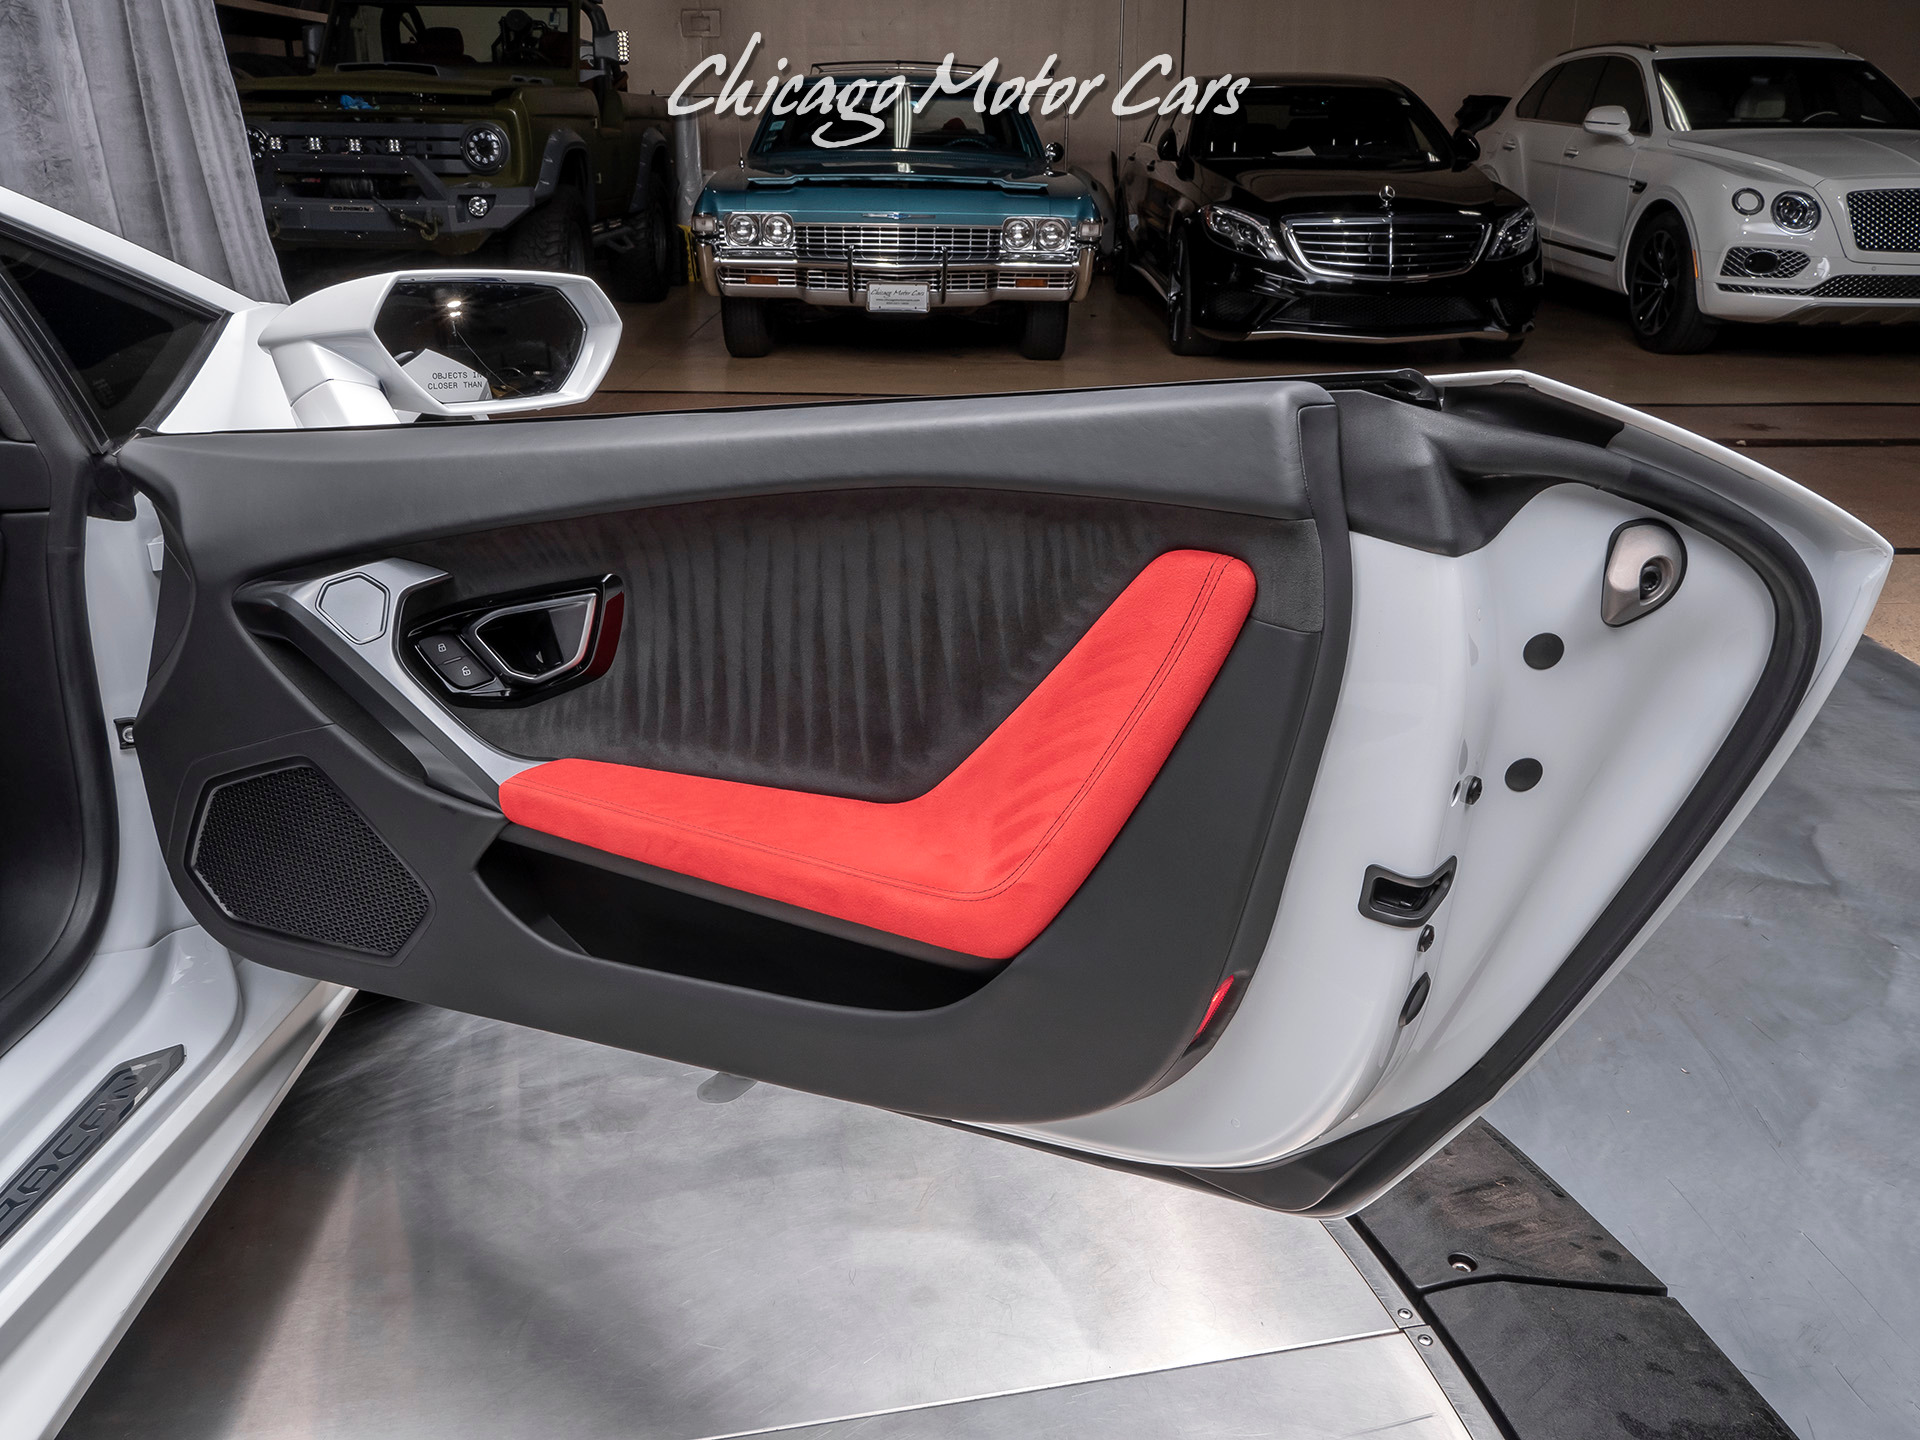 Used-2015-Lamborghini-Huracan-LP610-4-Coupe-Upgrades-HRE-Wheels